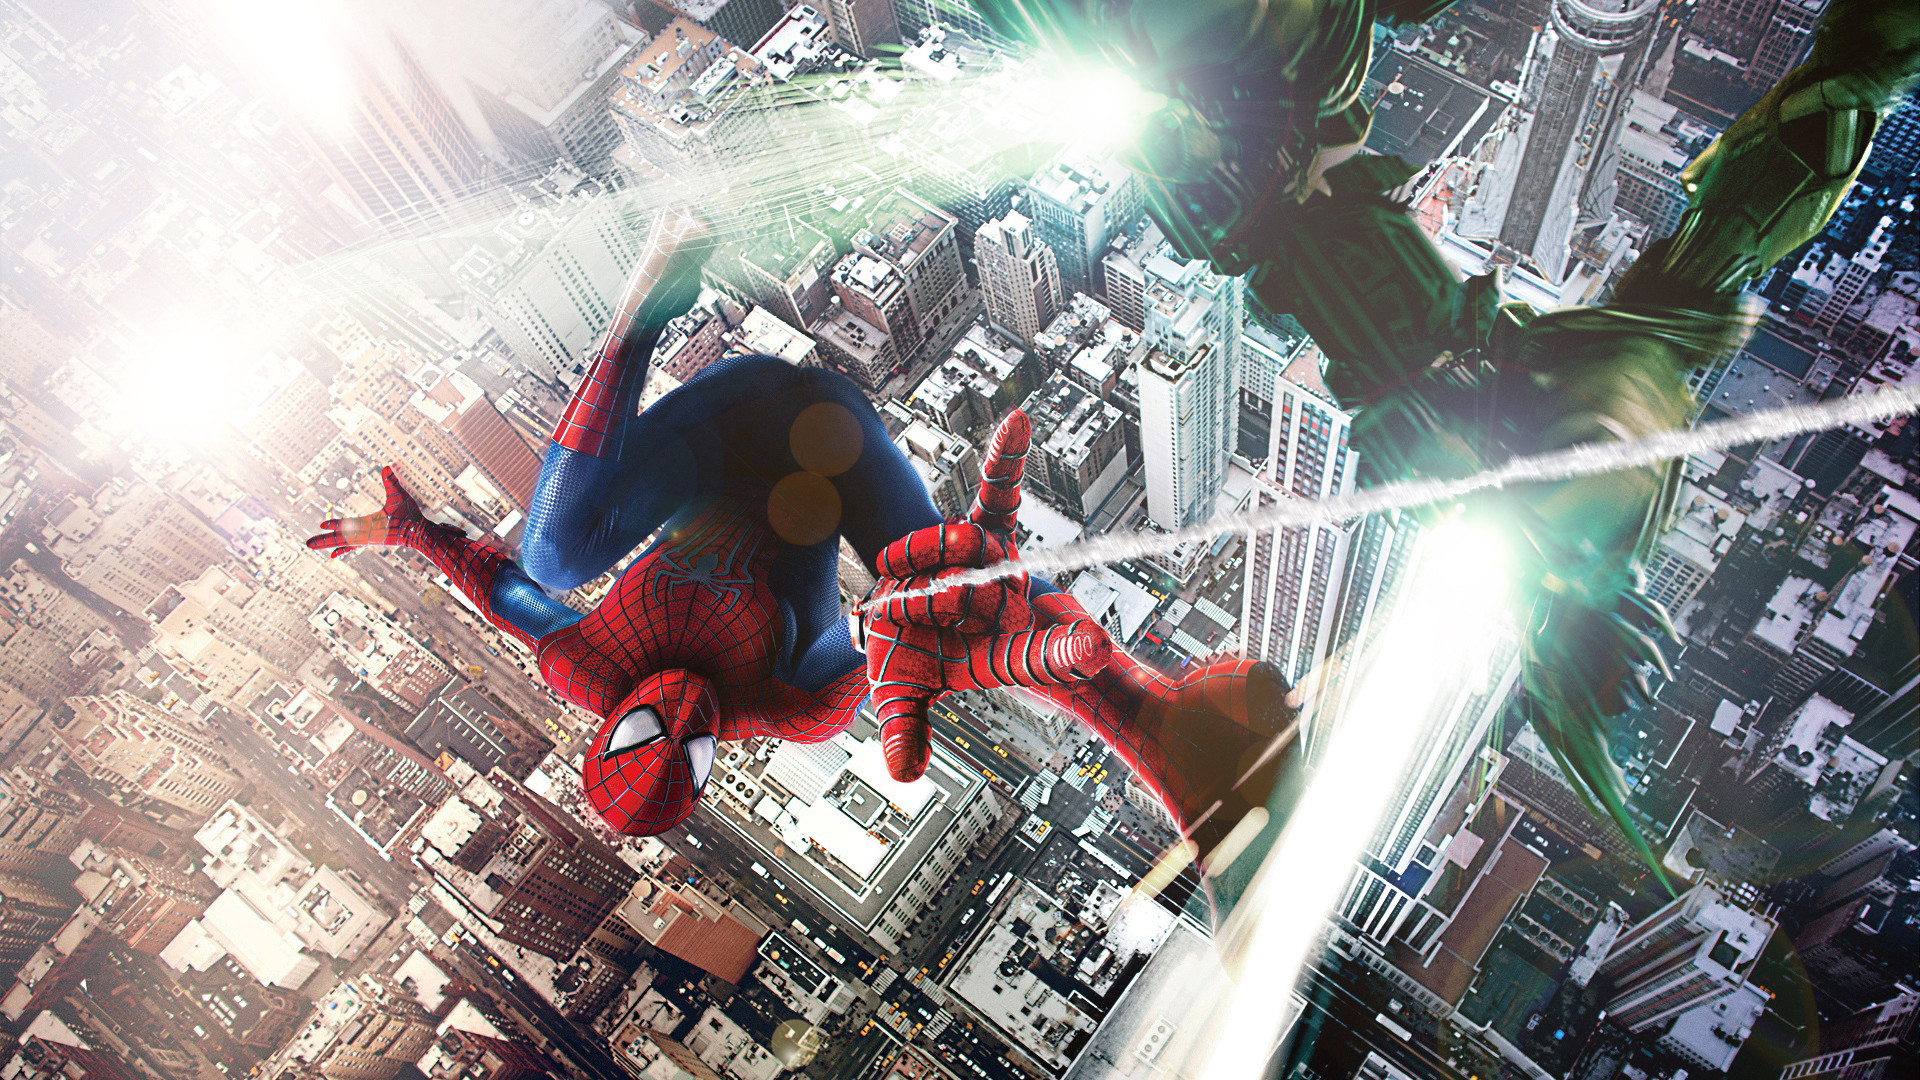 1920x1080 ... The Amazing Spider-Man 2 Movie Poster Wallpaper #3 by ProfessorAdagio